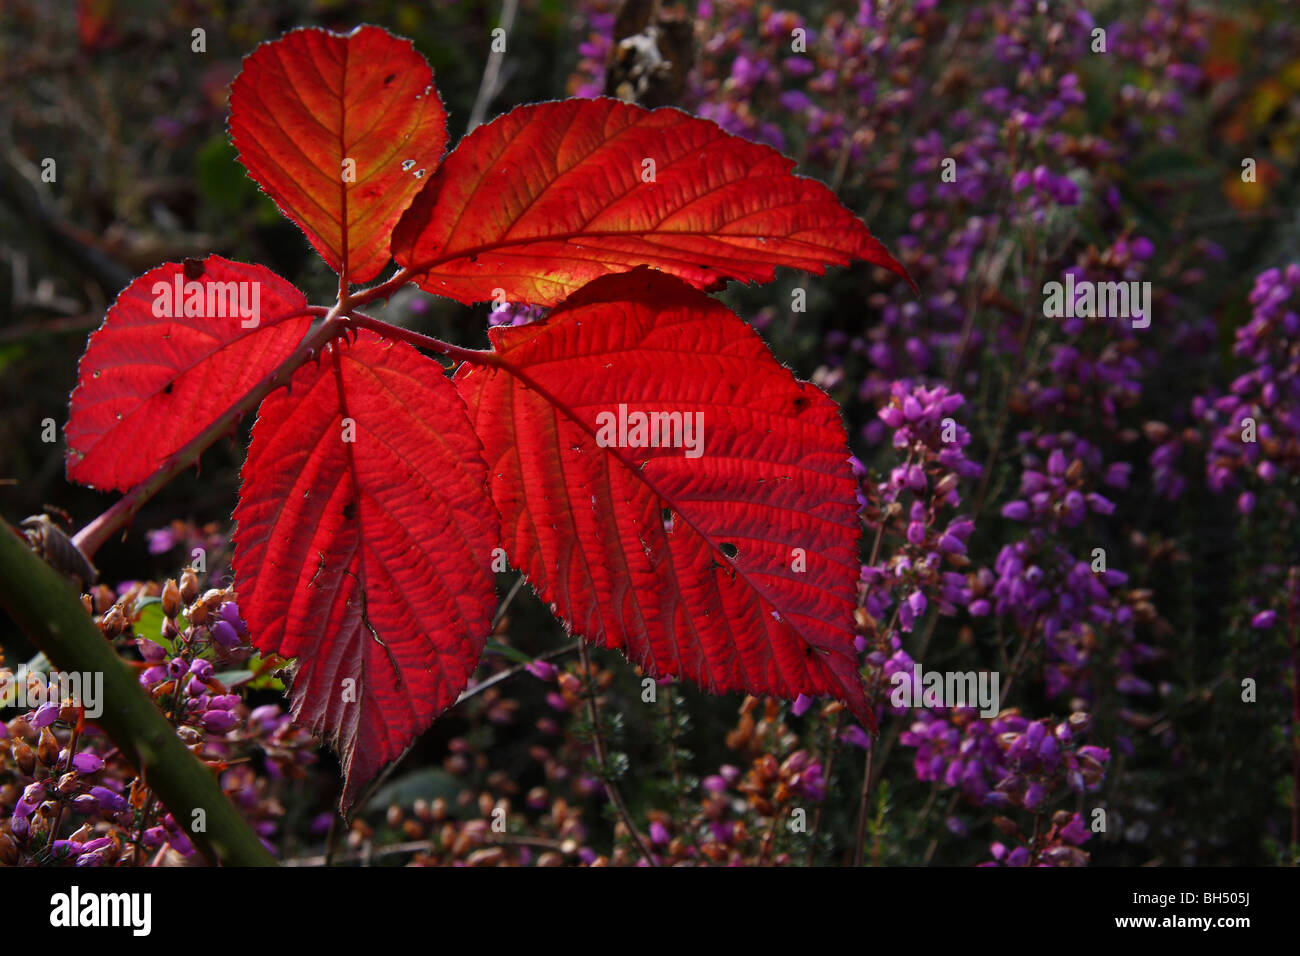 Un rojo profundo bramble retroiluminado con hojas de brezo púrpura detrás. Foto de stock